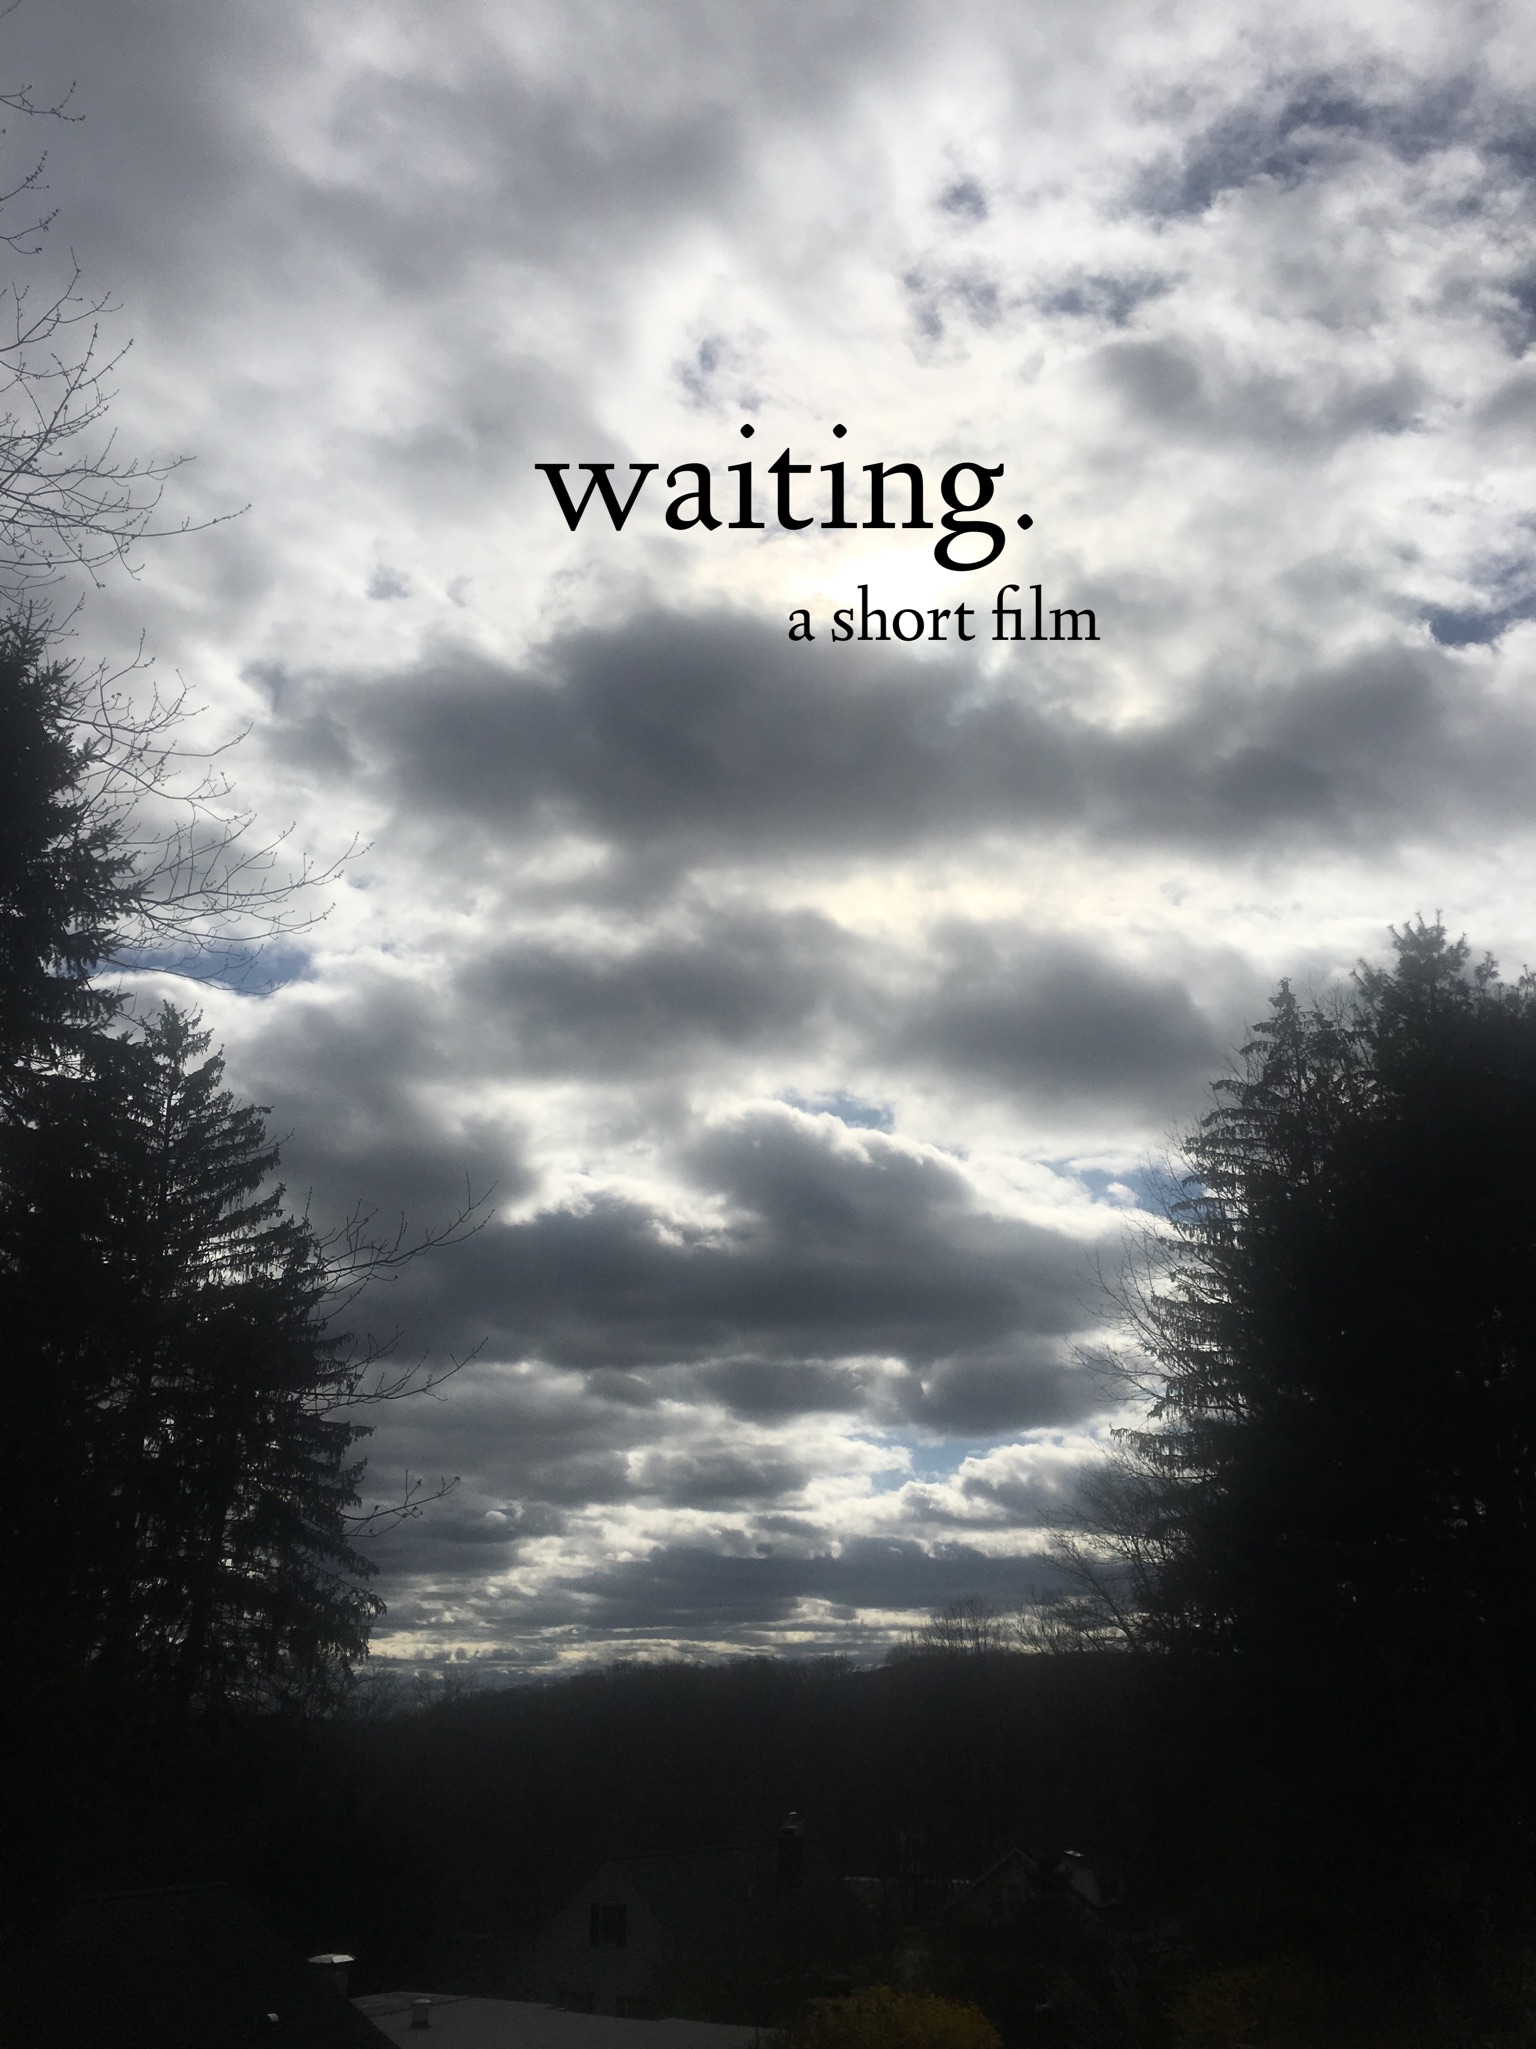 Waiting, a short film